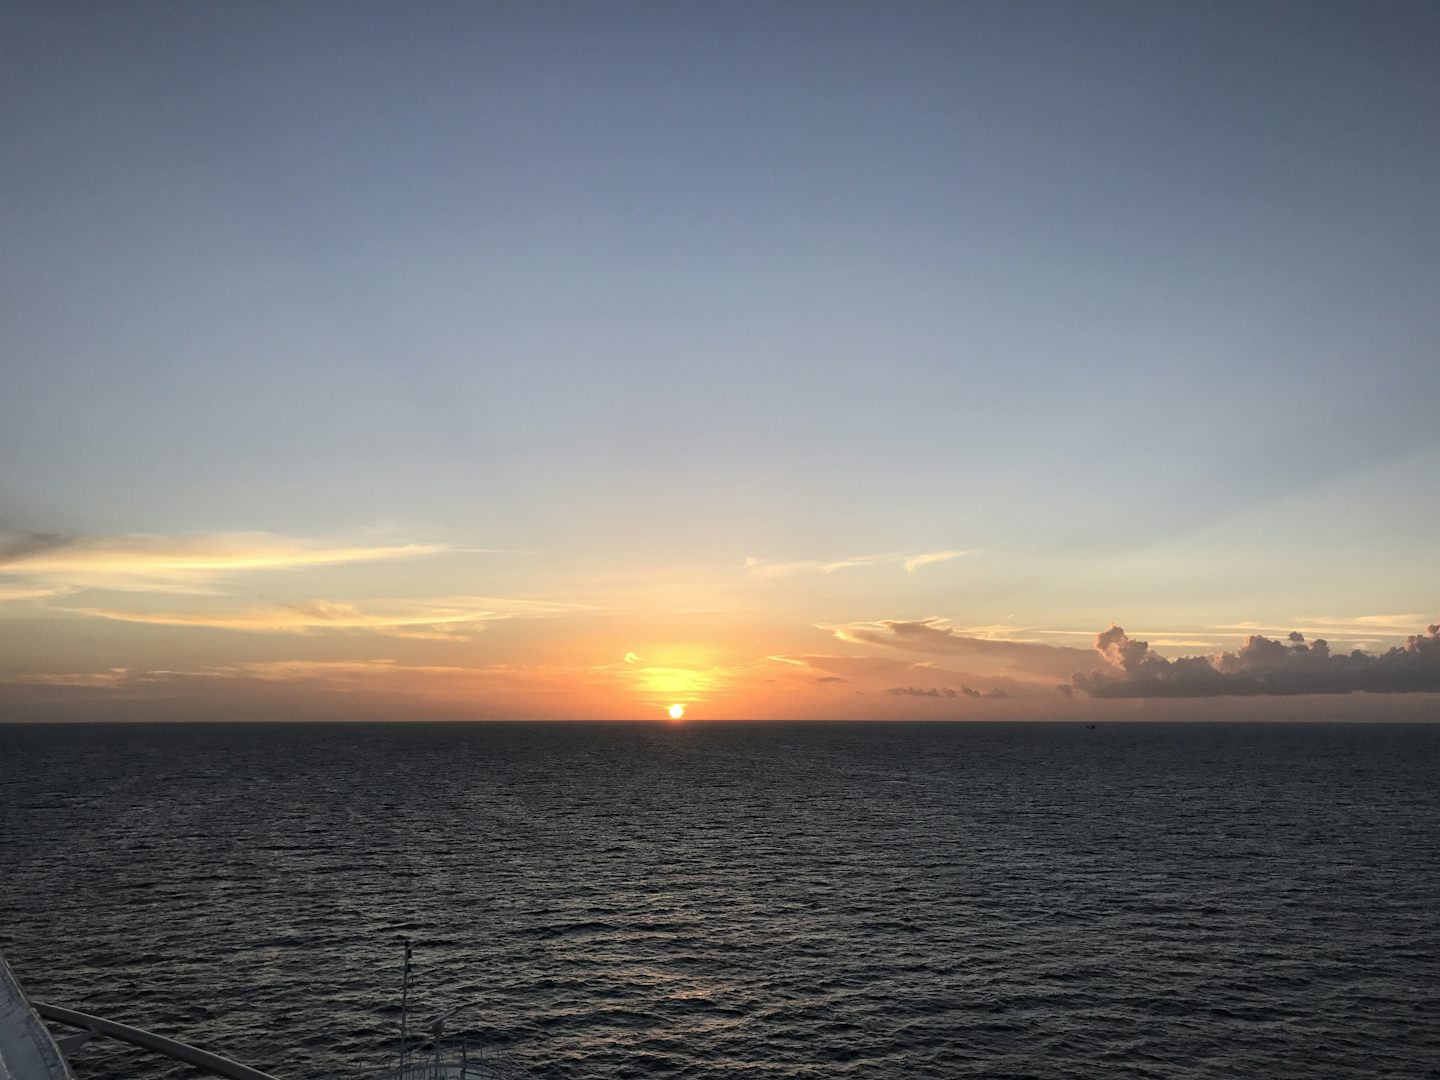 Gorgeous Atlantic Sunset